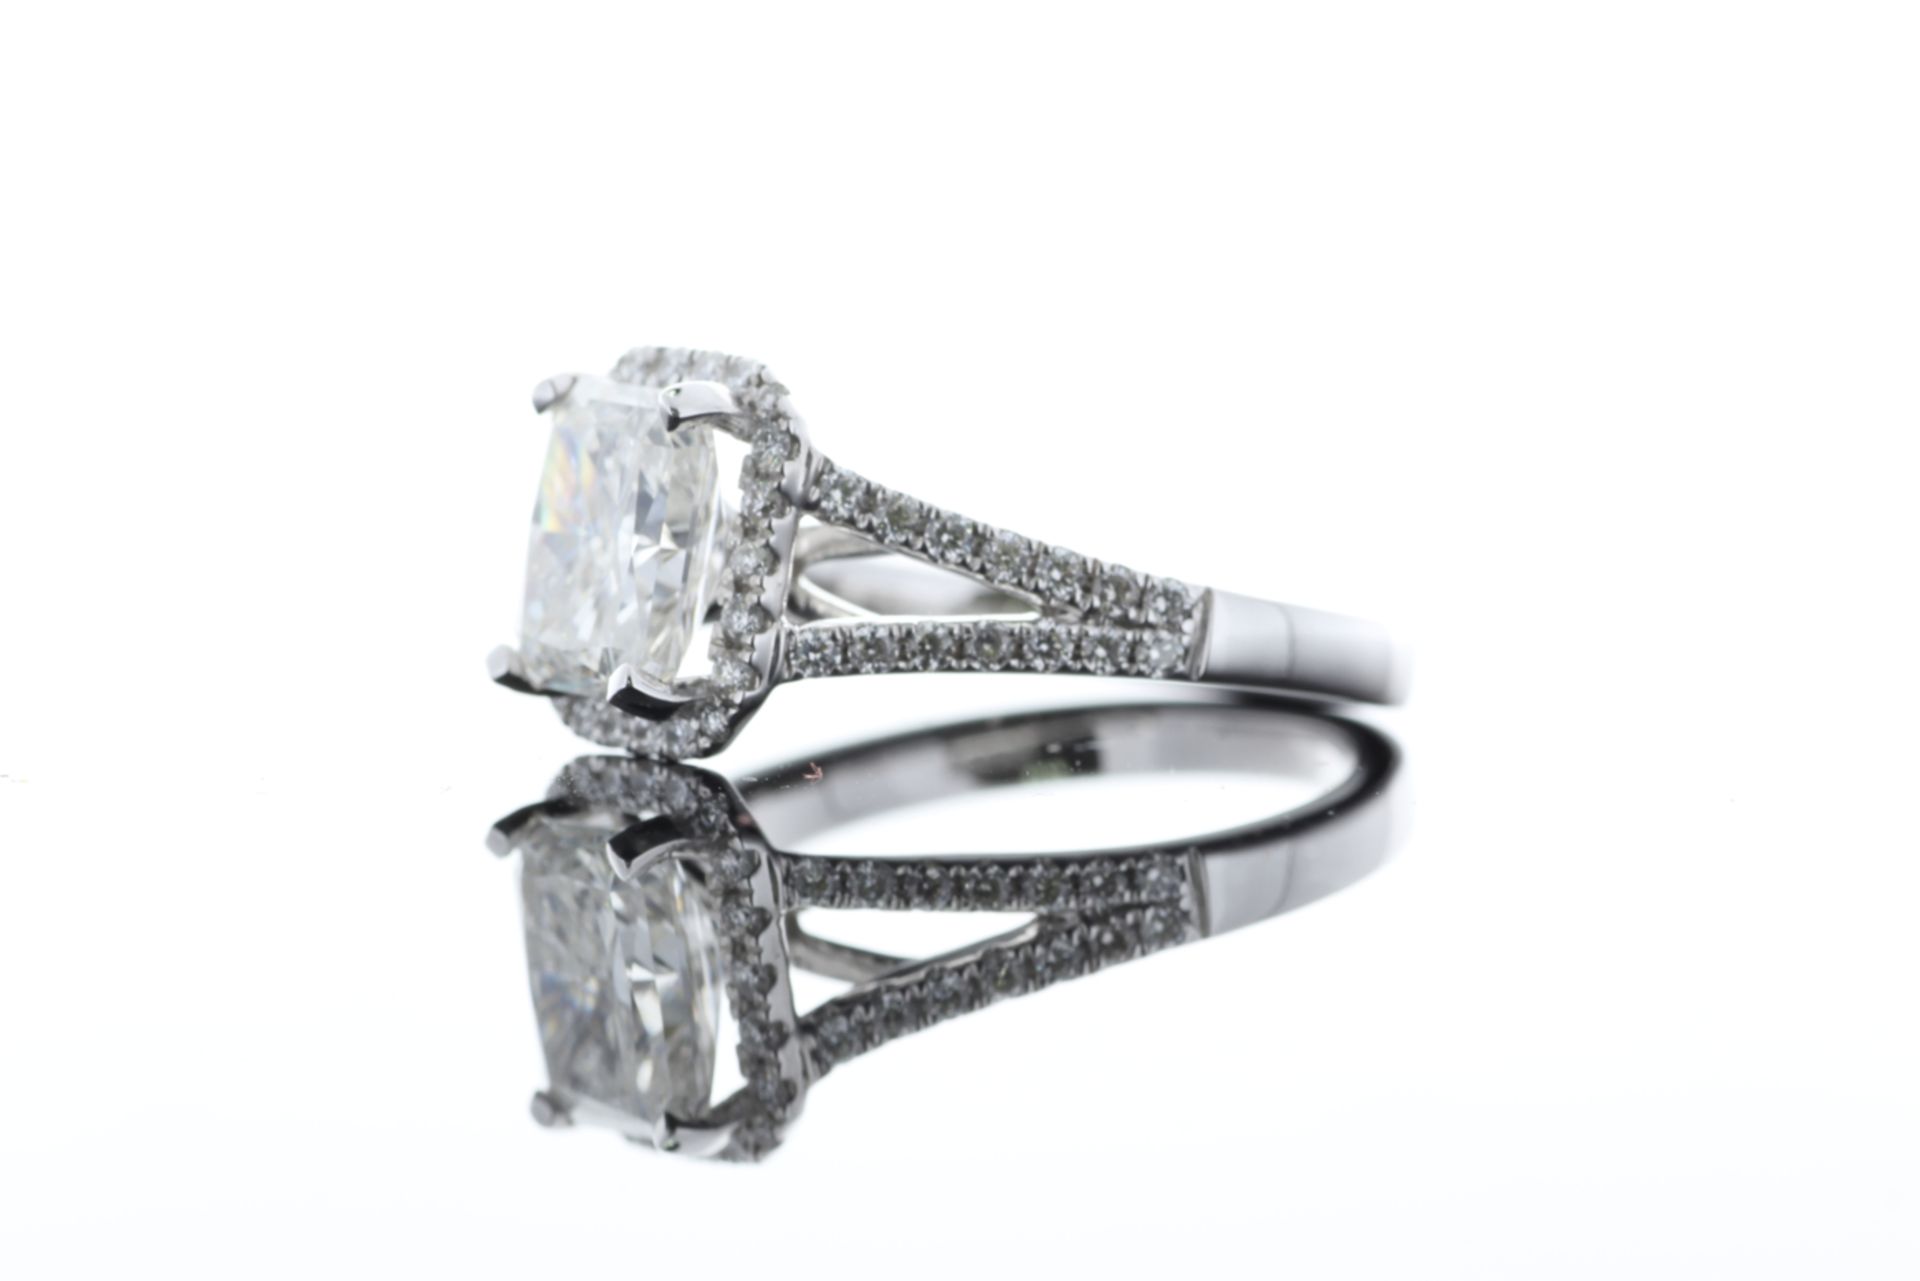 18ct White Gold Single Stone Radiant Cut Diamond With Halo Setting Ring 2.51 (2.01) - Image 13 of 73